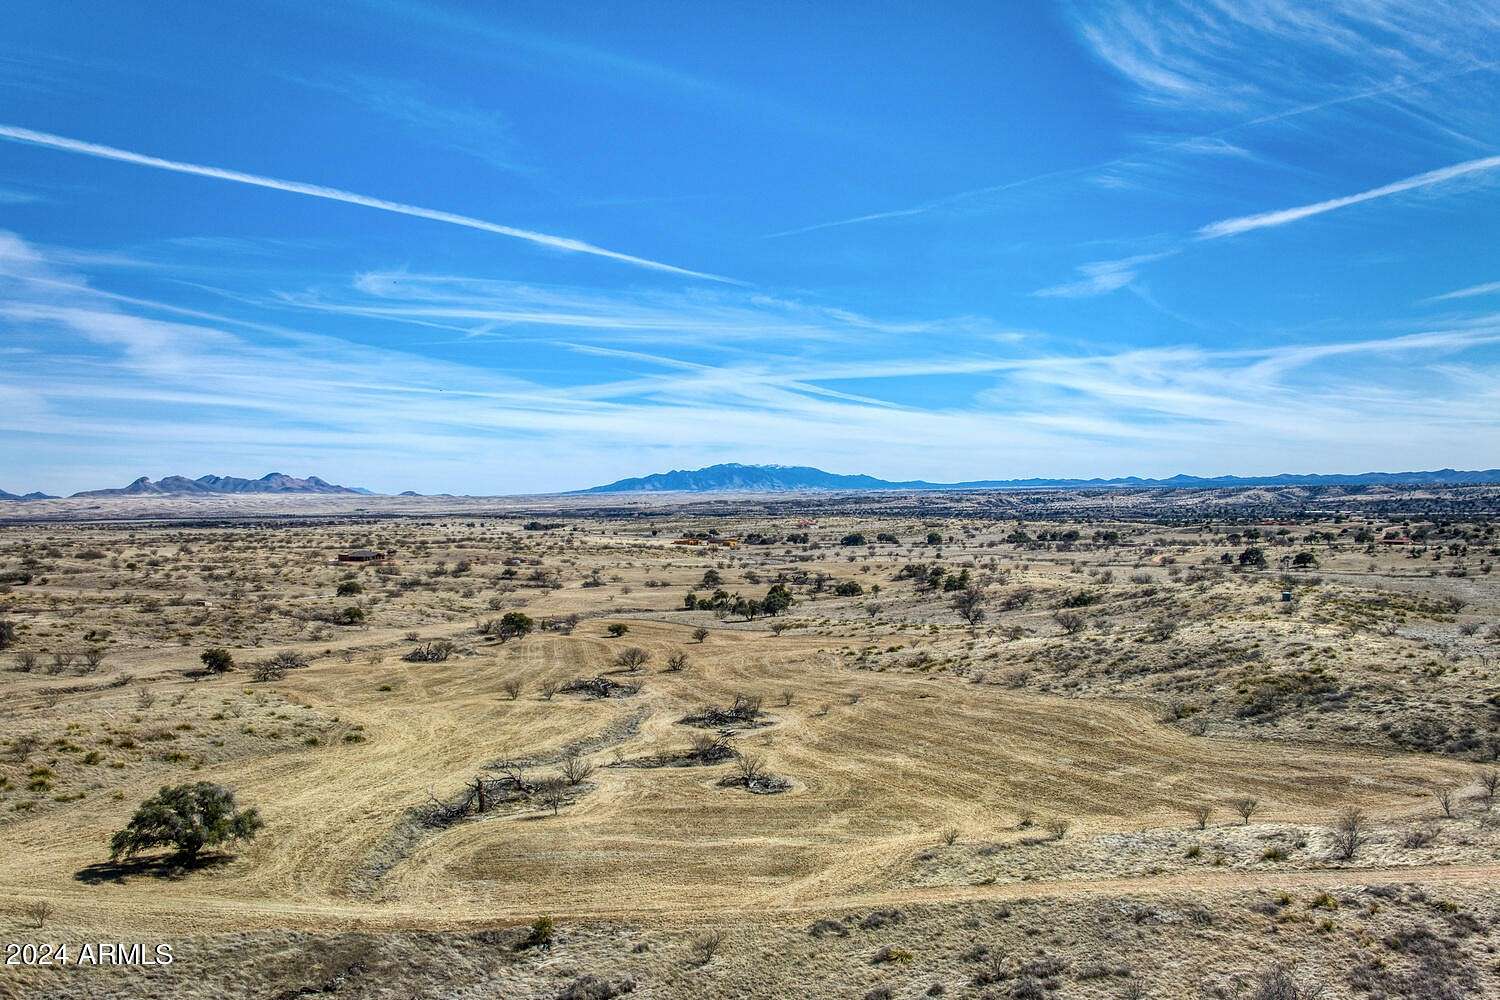 40 Acres of Land for Sale in Sonoita, Arizona